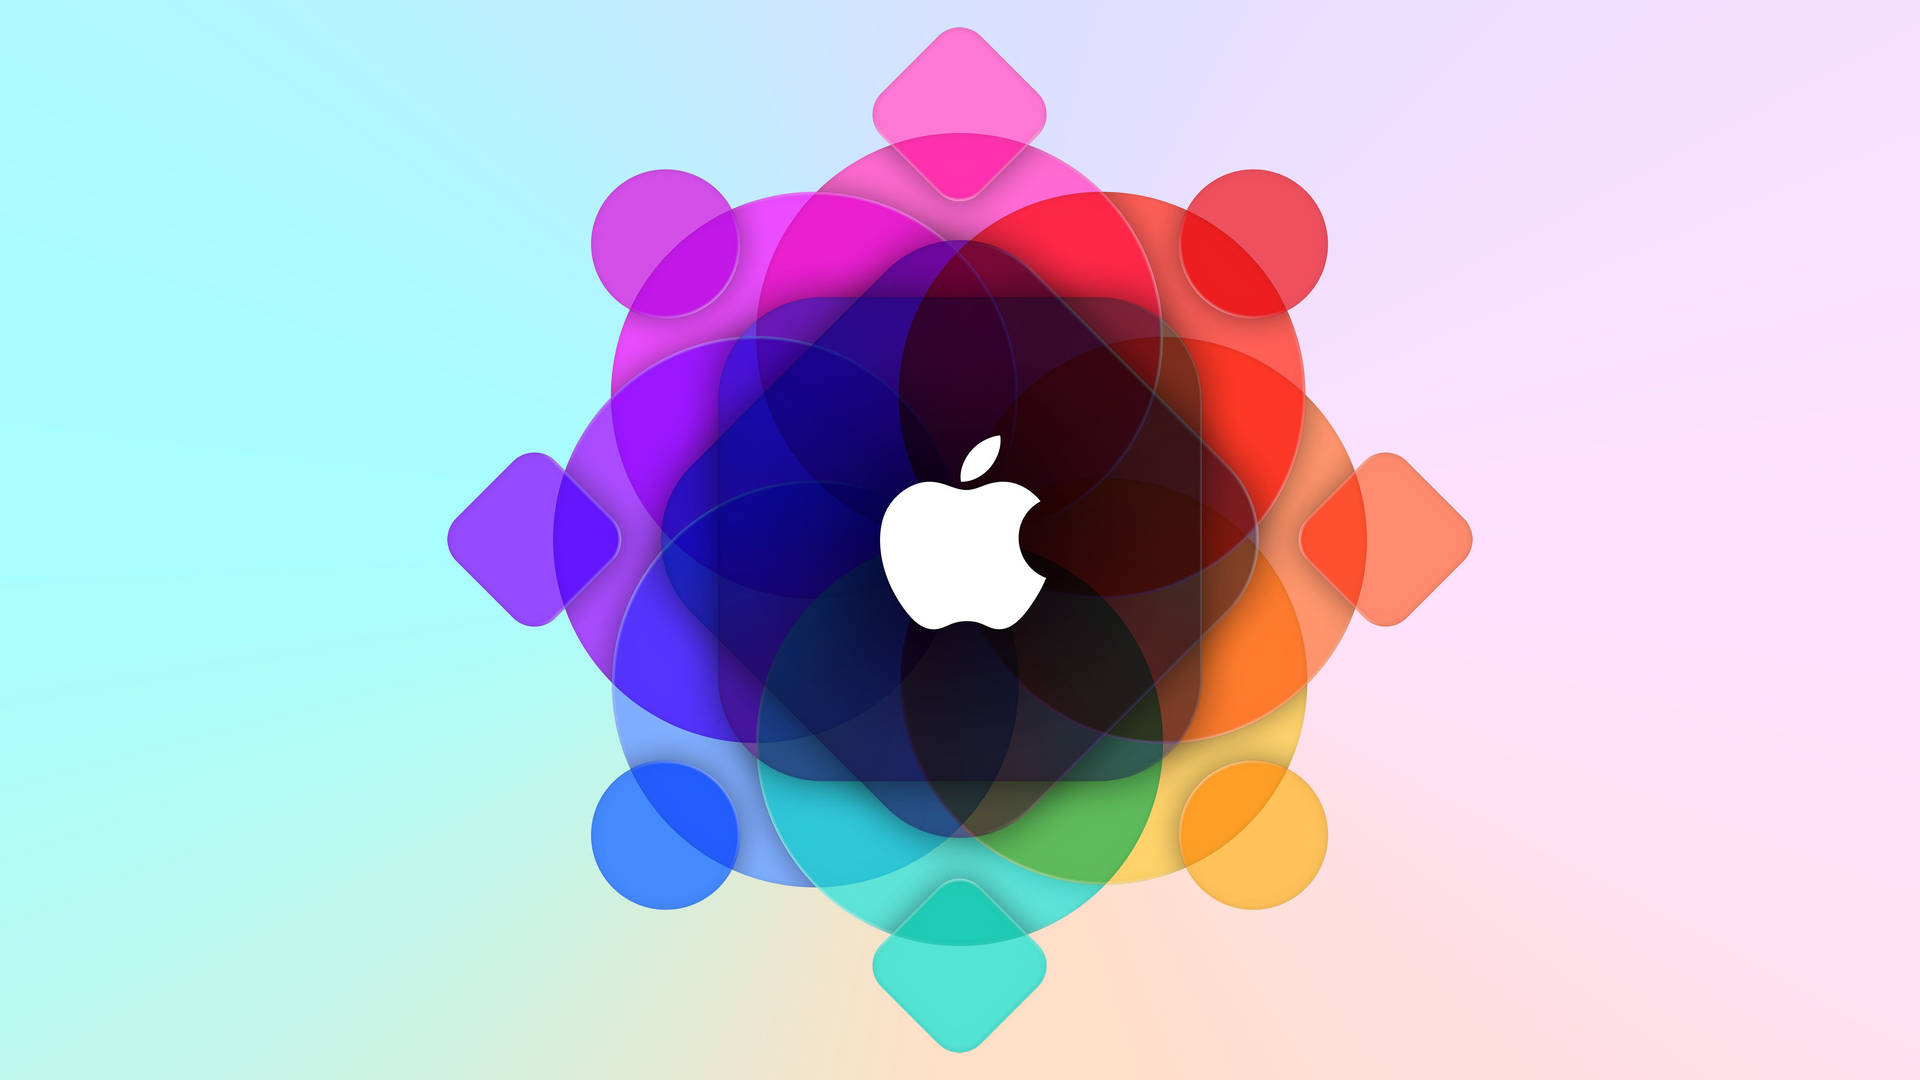 Vibrant Apple Logo With Spheres